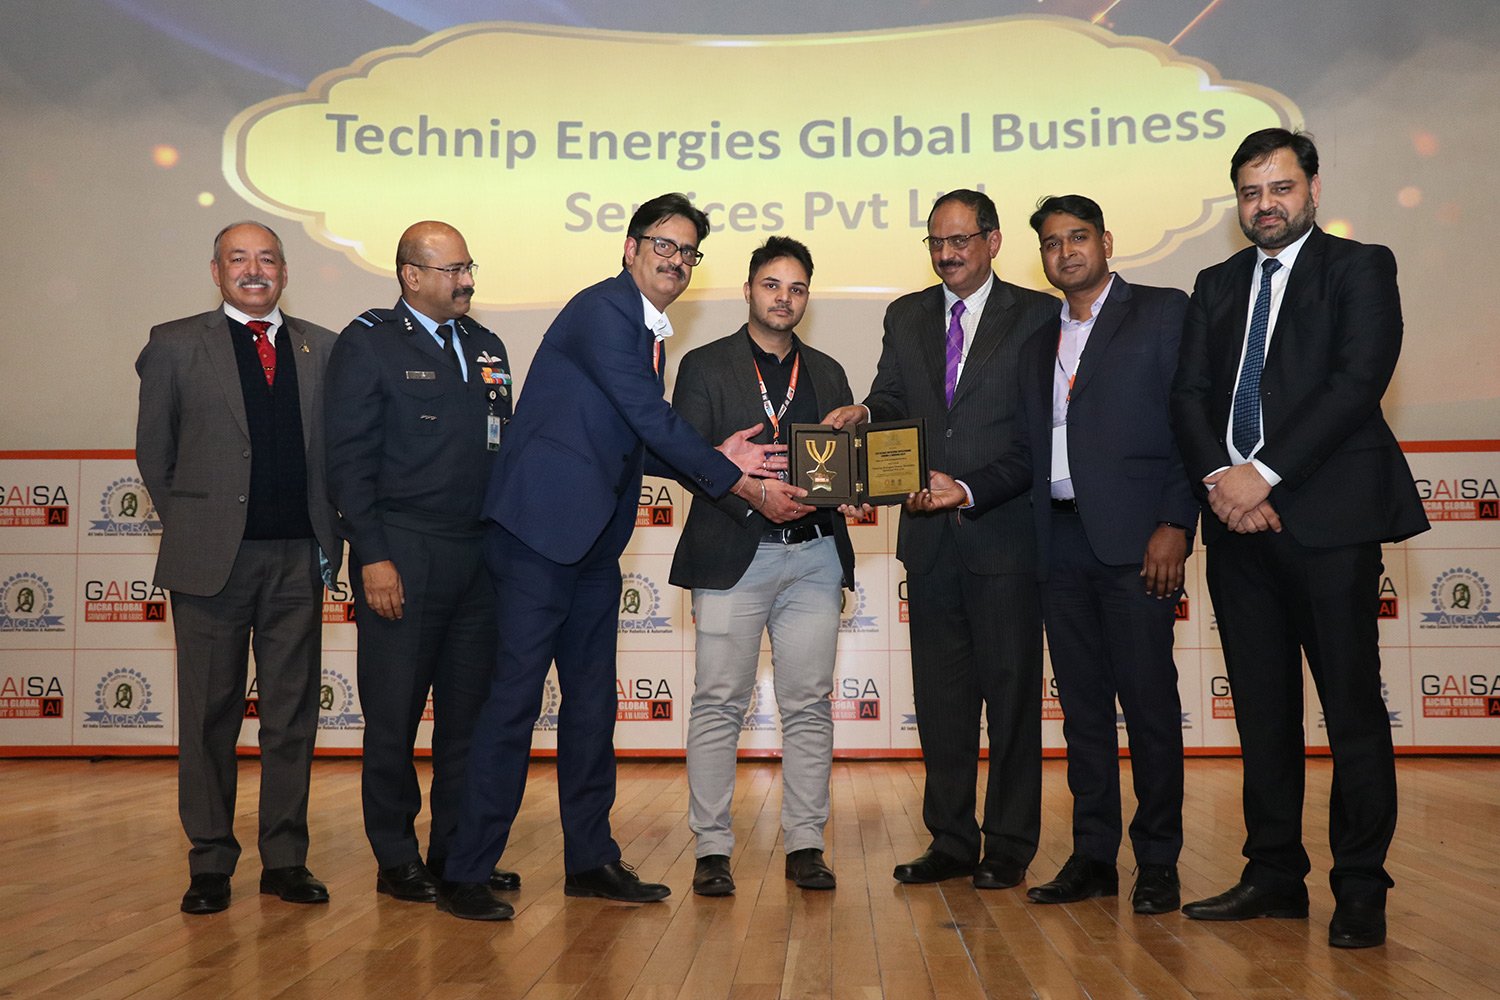 Technip Energies Global Business Services Pvt Ltd